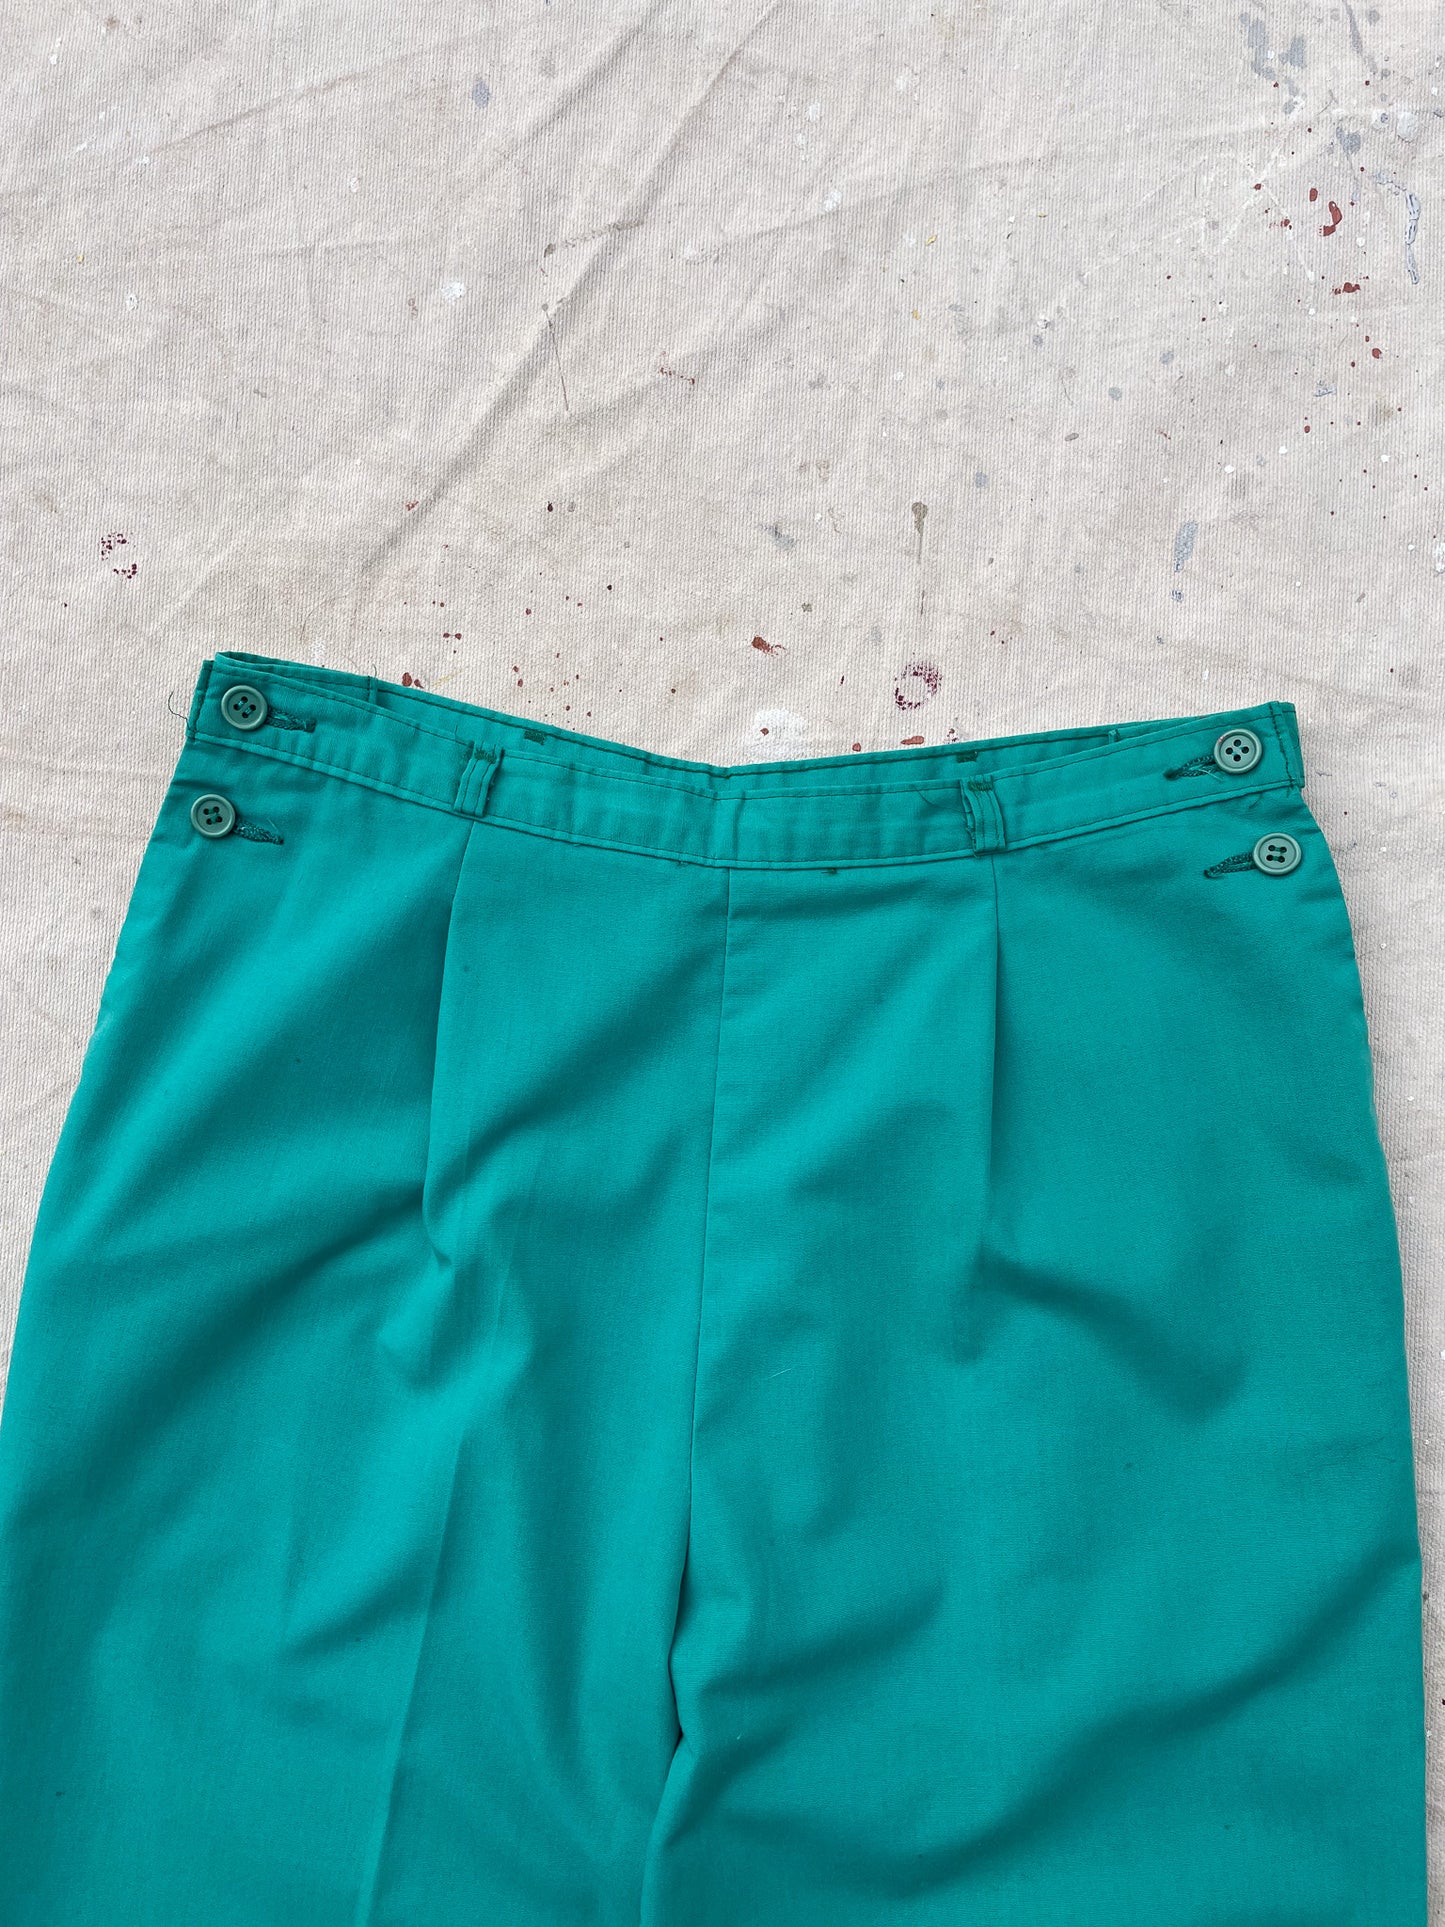 Levi's Juniors Button Waist Trousers—[30x31]